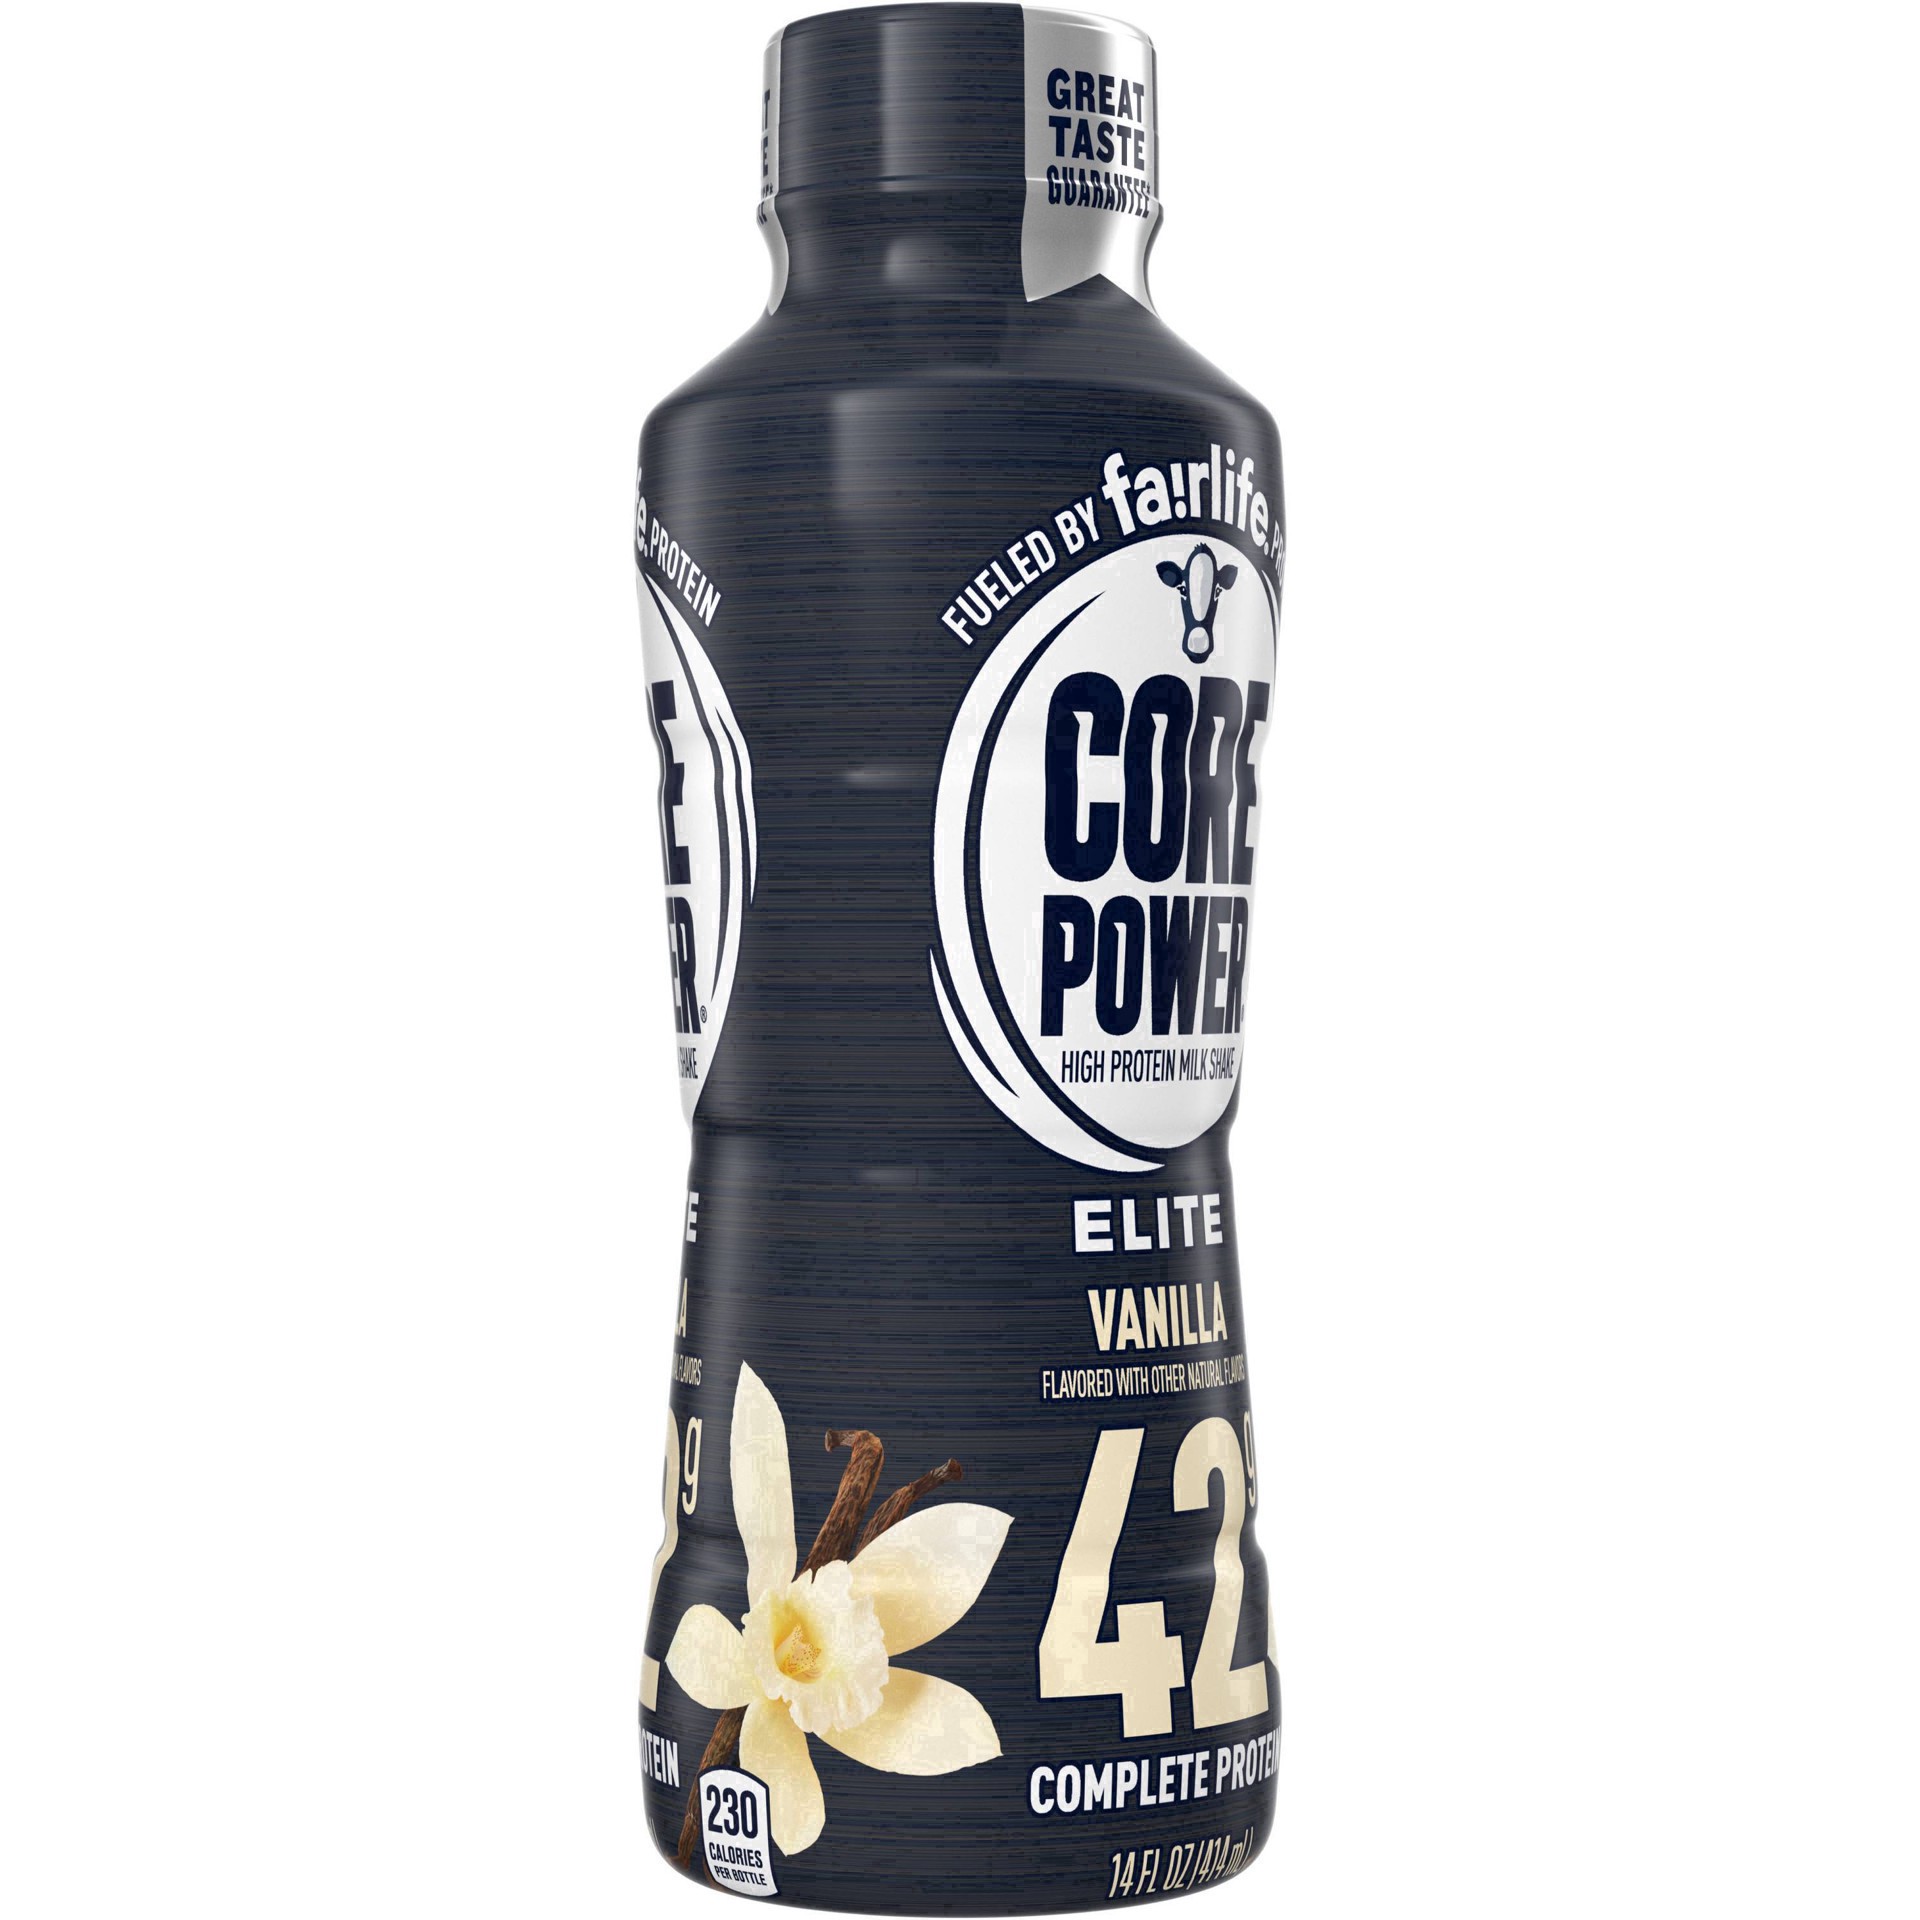 slide 54 of 78, Core Power High Protein Elite Vanilla Milk Shake 14 fl oz, 14 fl oz